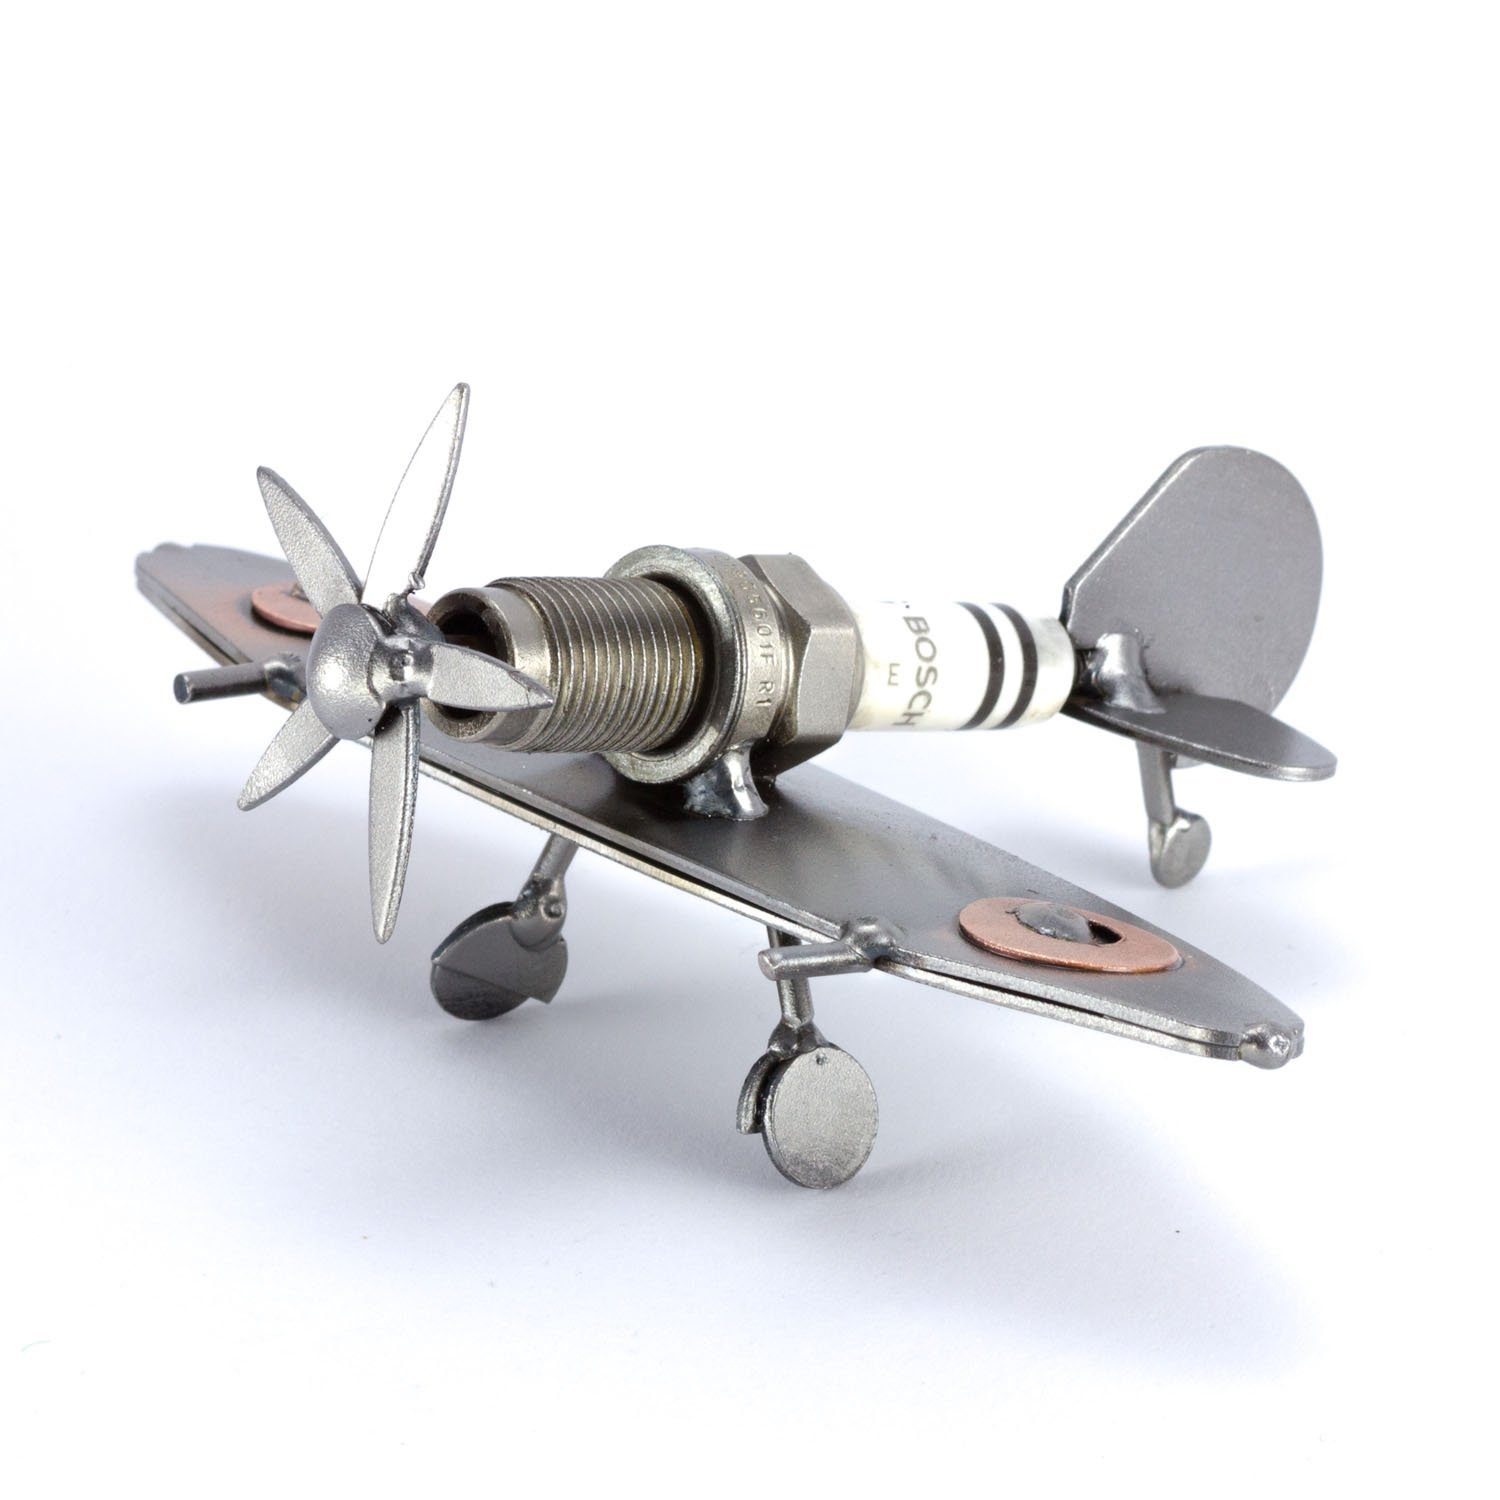 Steelman24 Dekofigur Spitfire Flugzeug 2 Mini